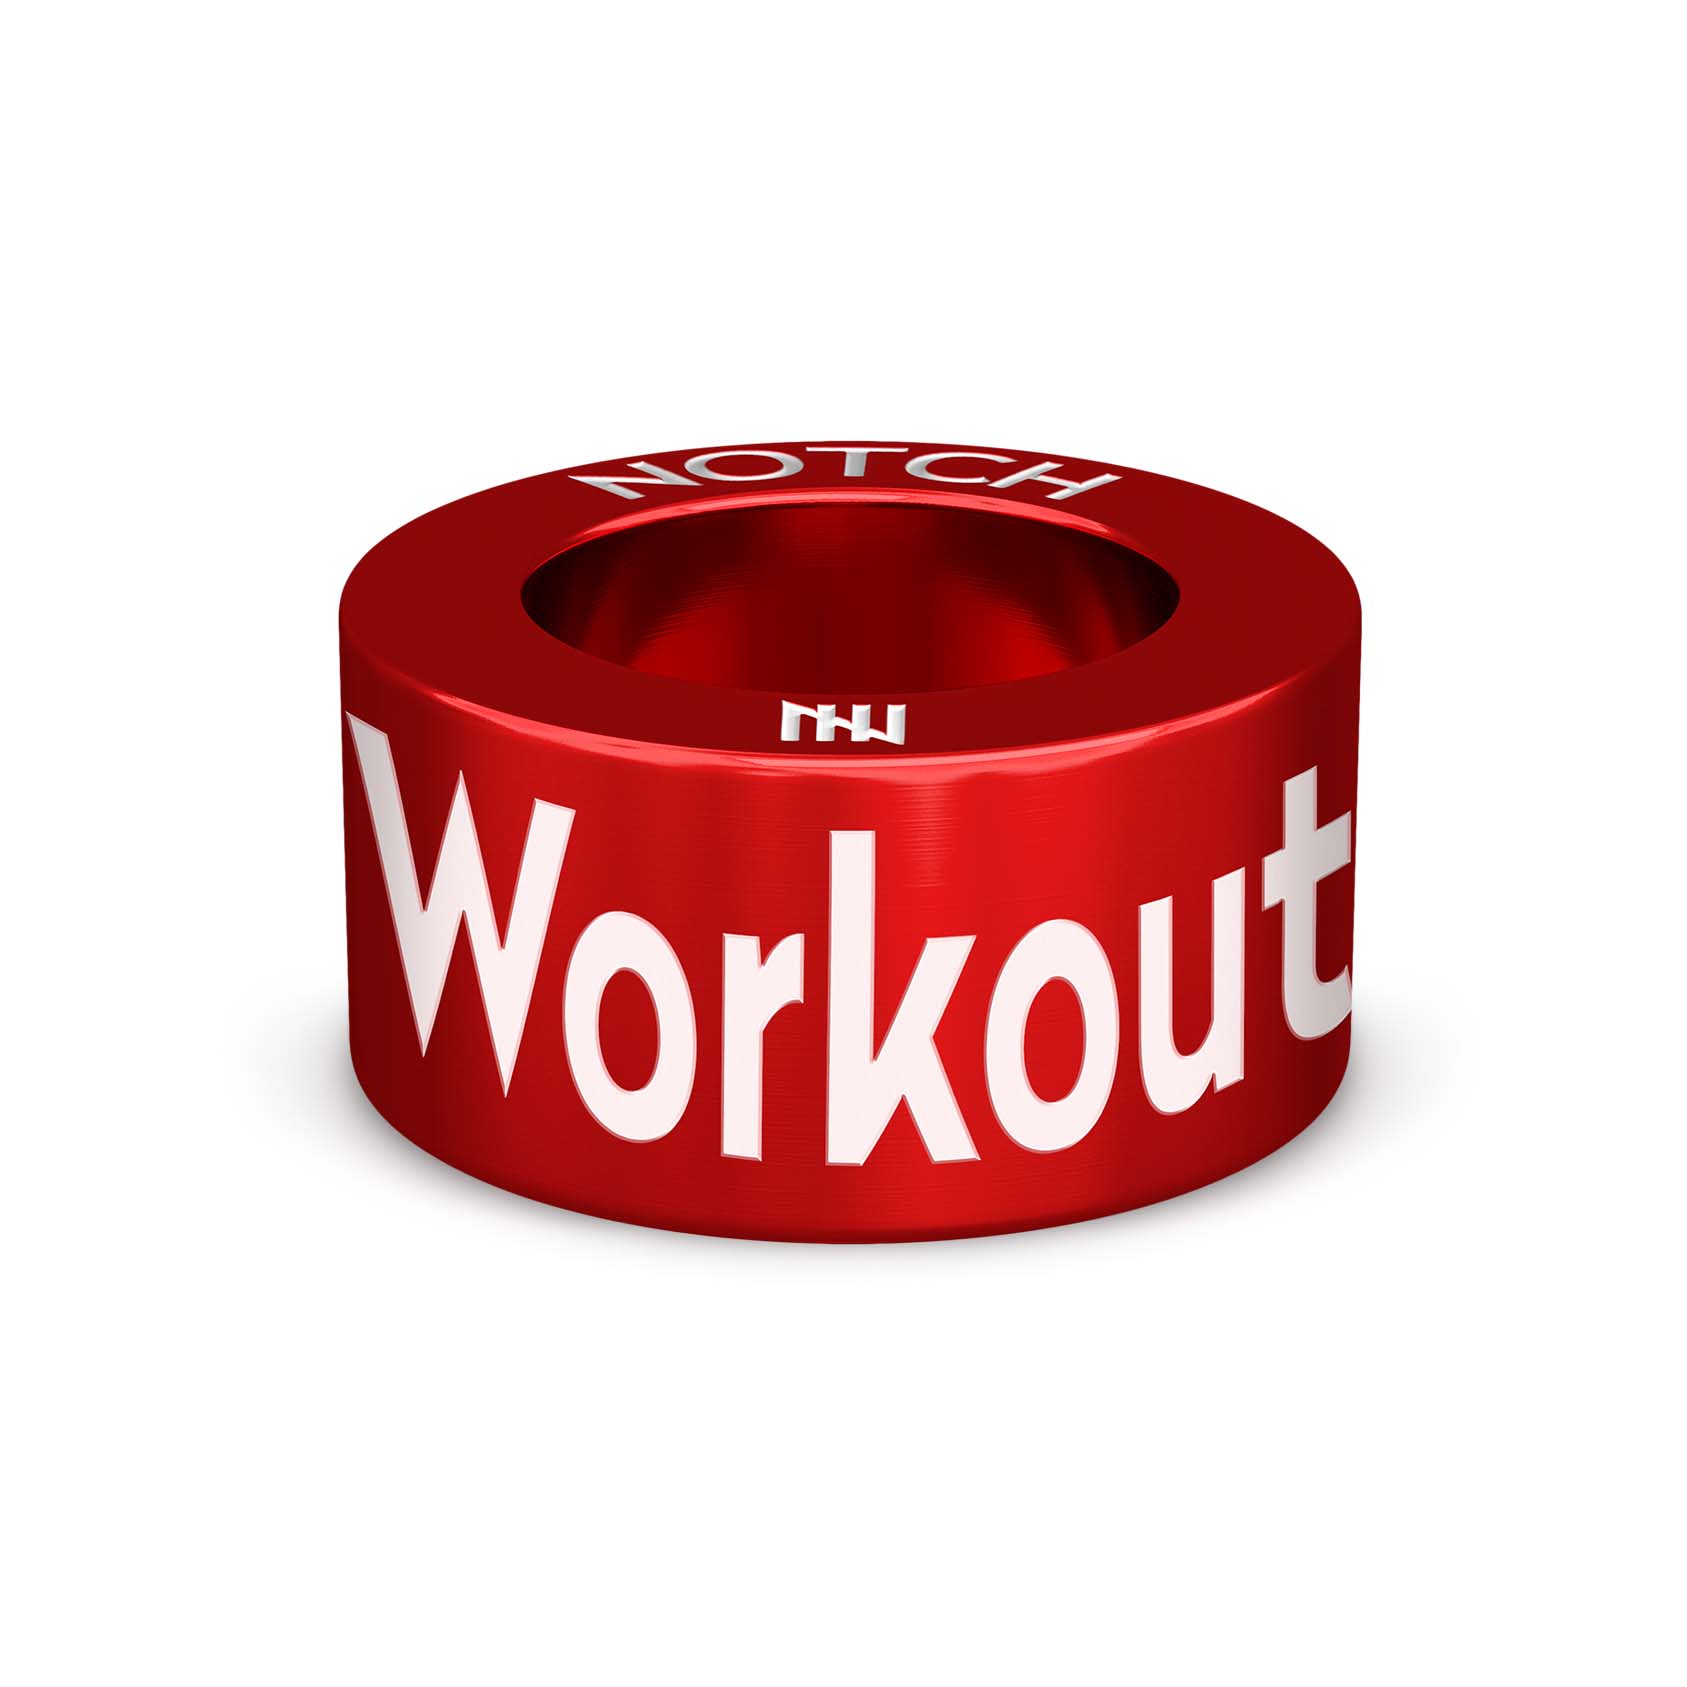 Workout Motivation NOTCH Charm (Full List)